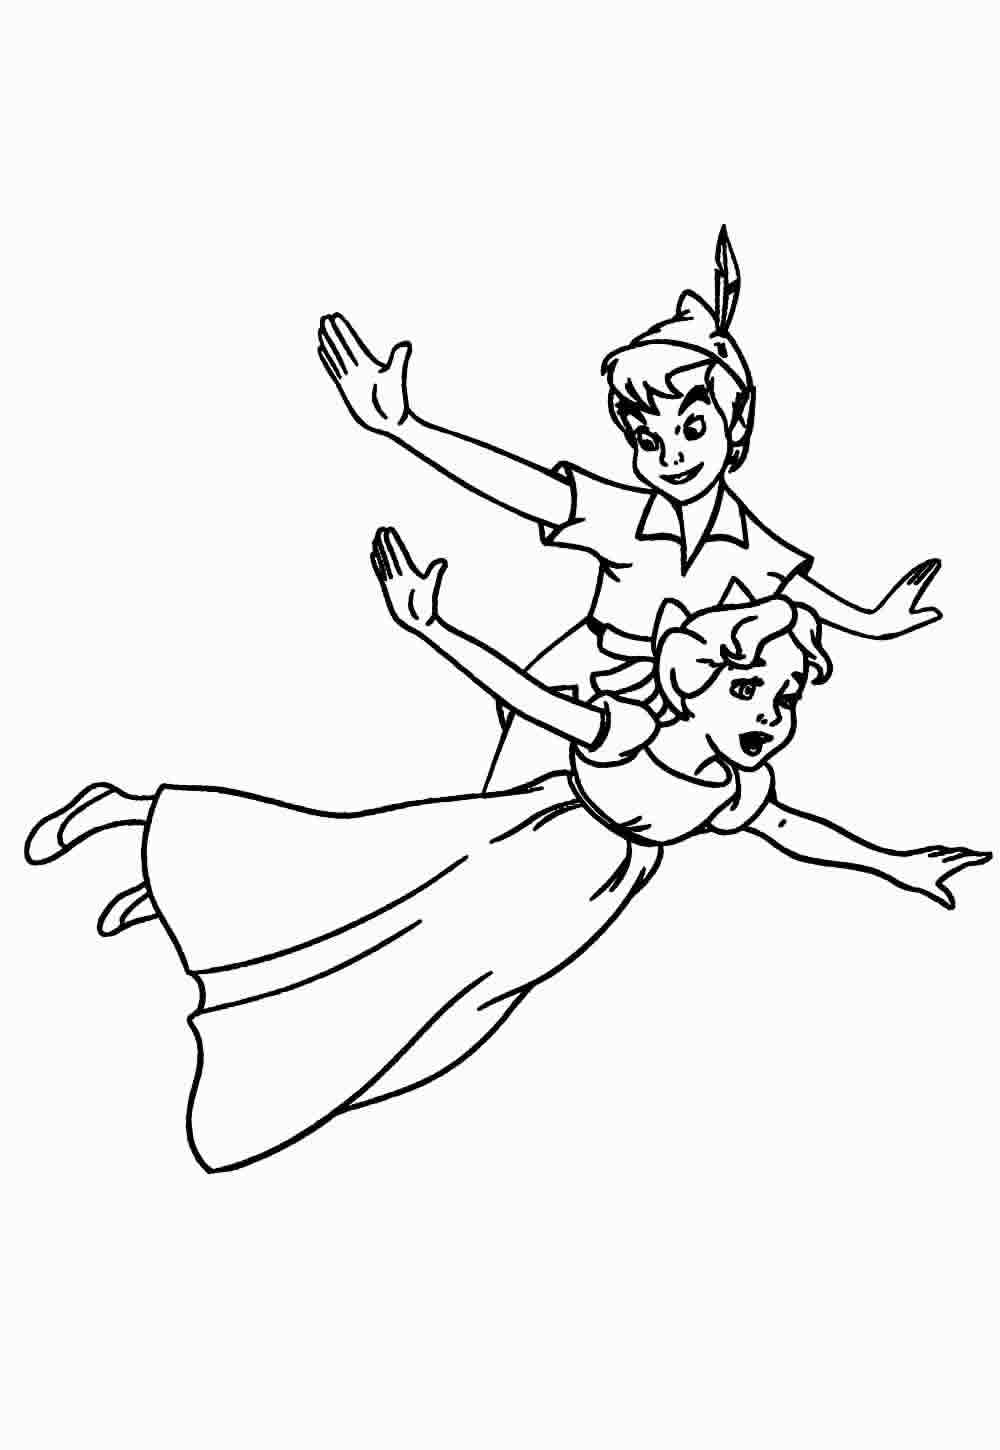 Peter Pan para colorir